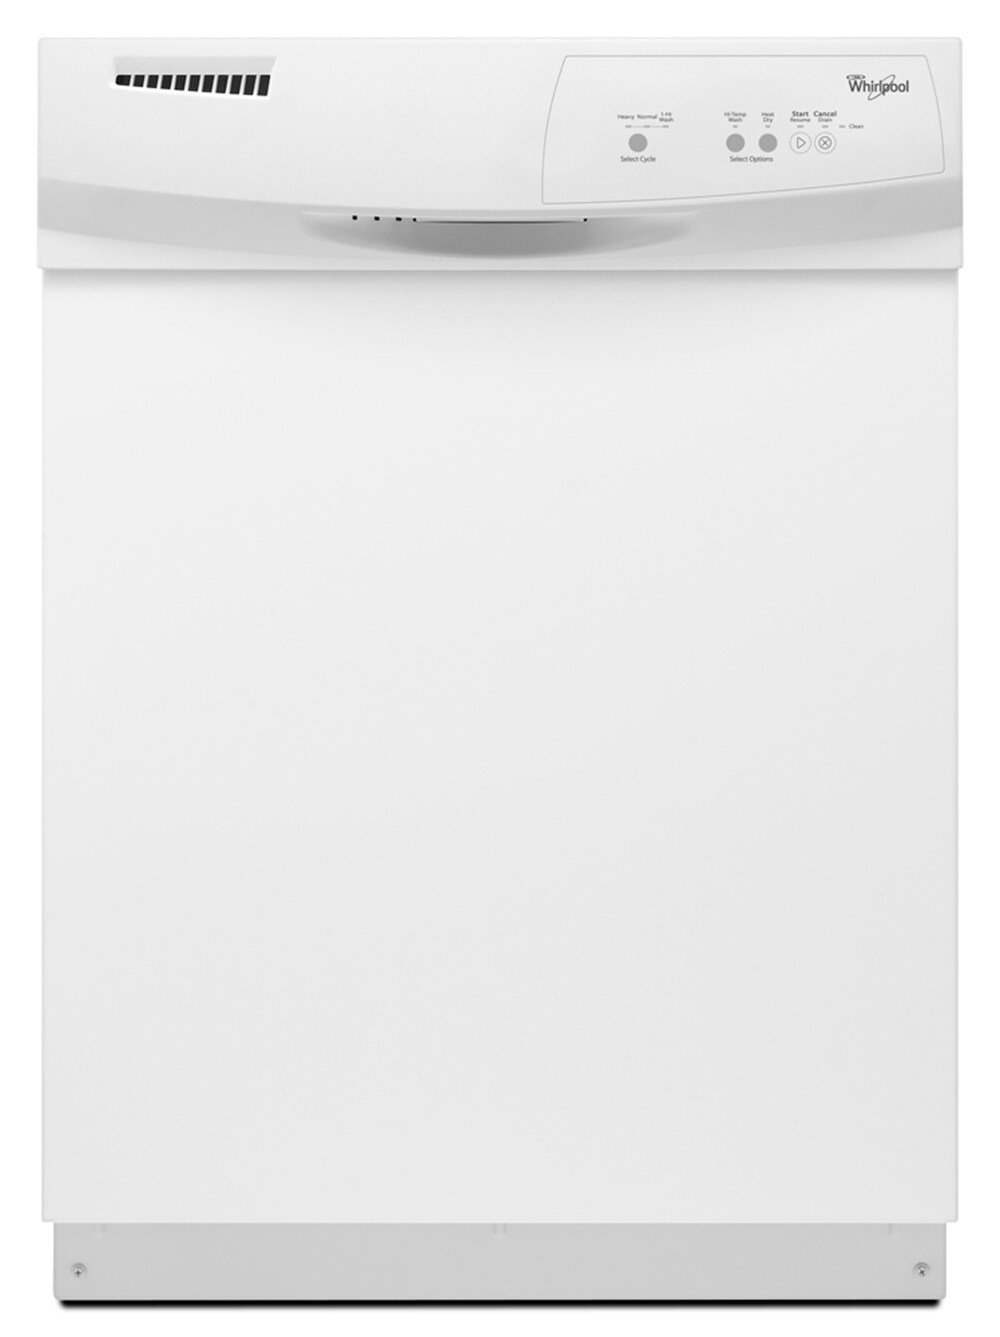 whirlpool dishwasher quiet partner ii clean filter